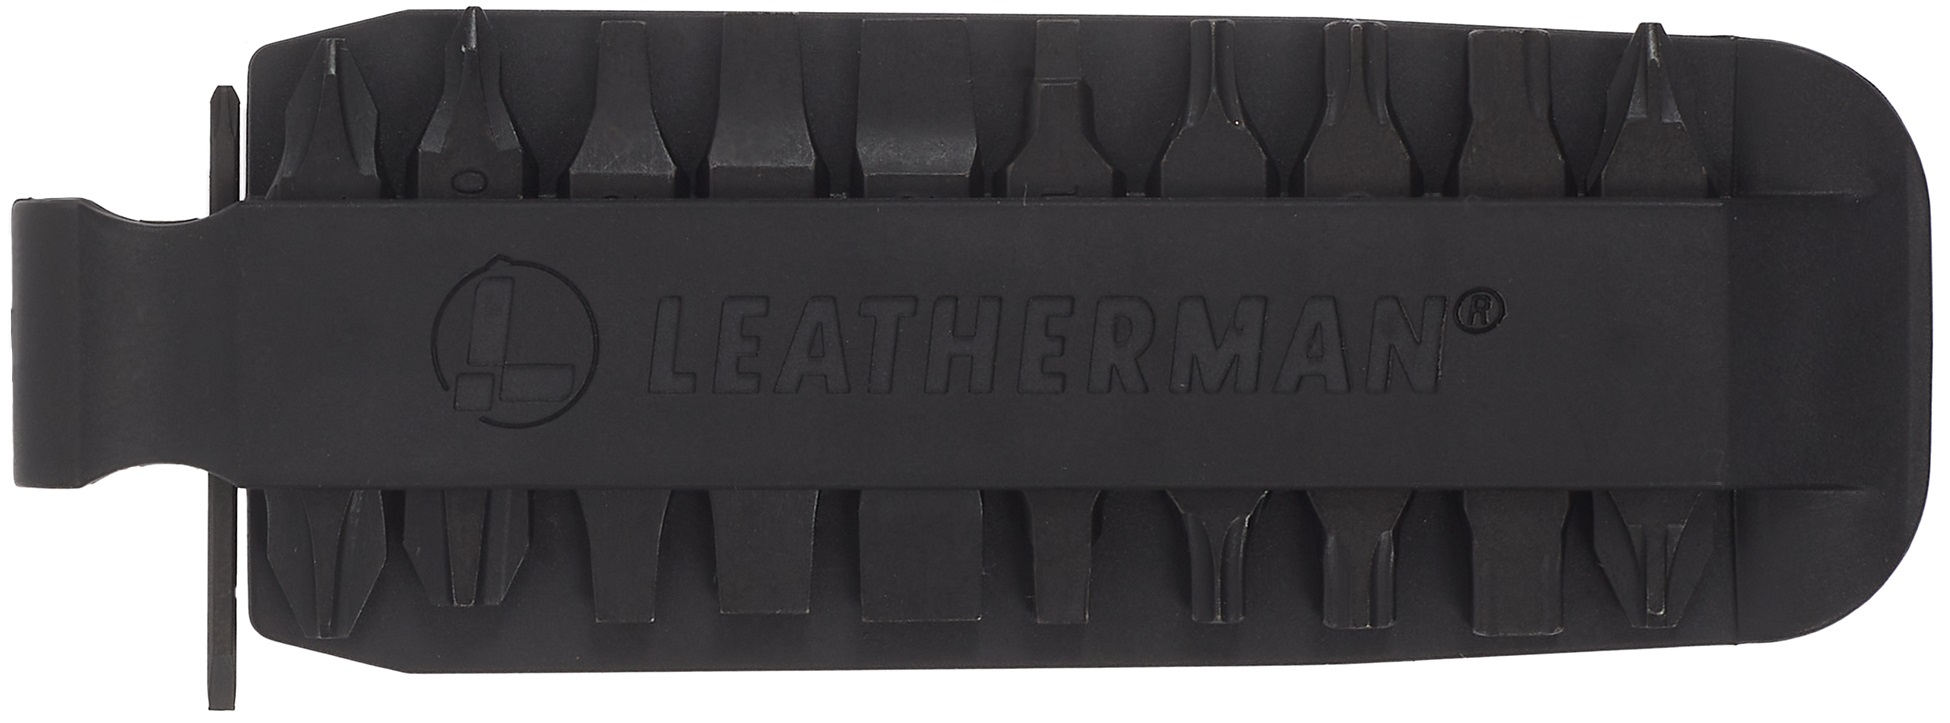 Leatherman Bit Kit #1